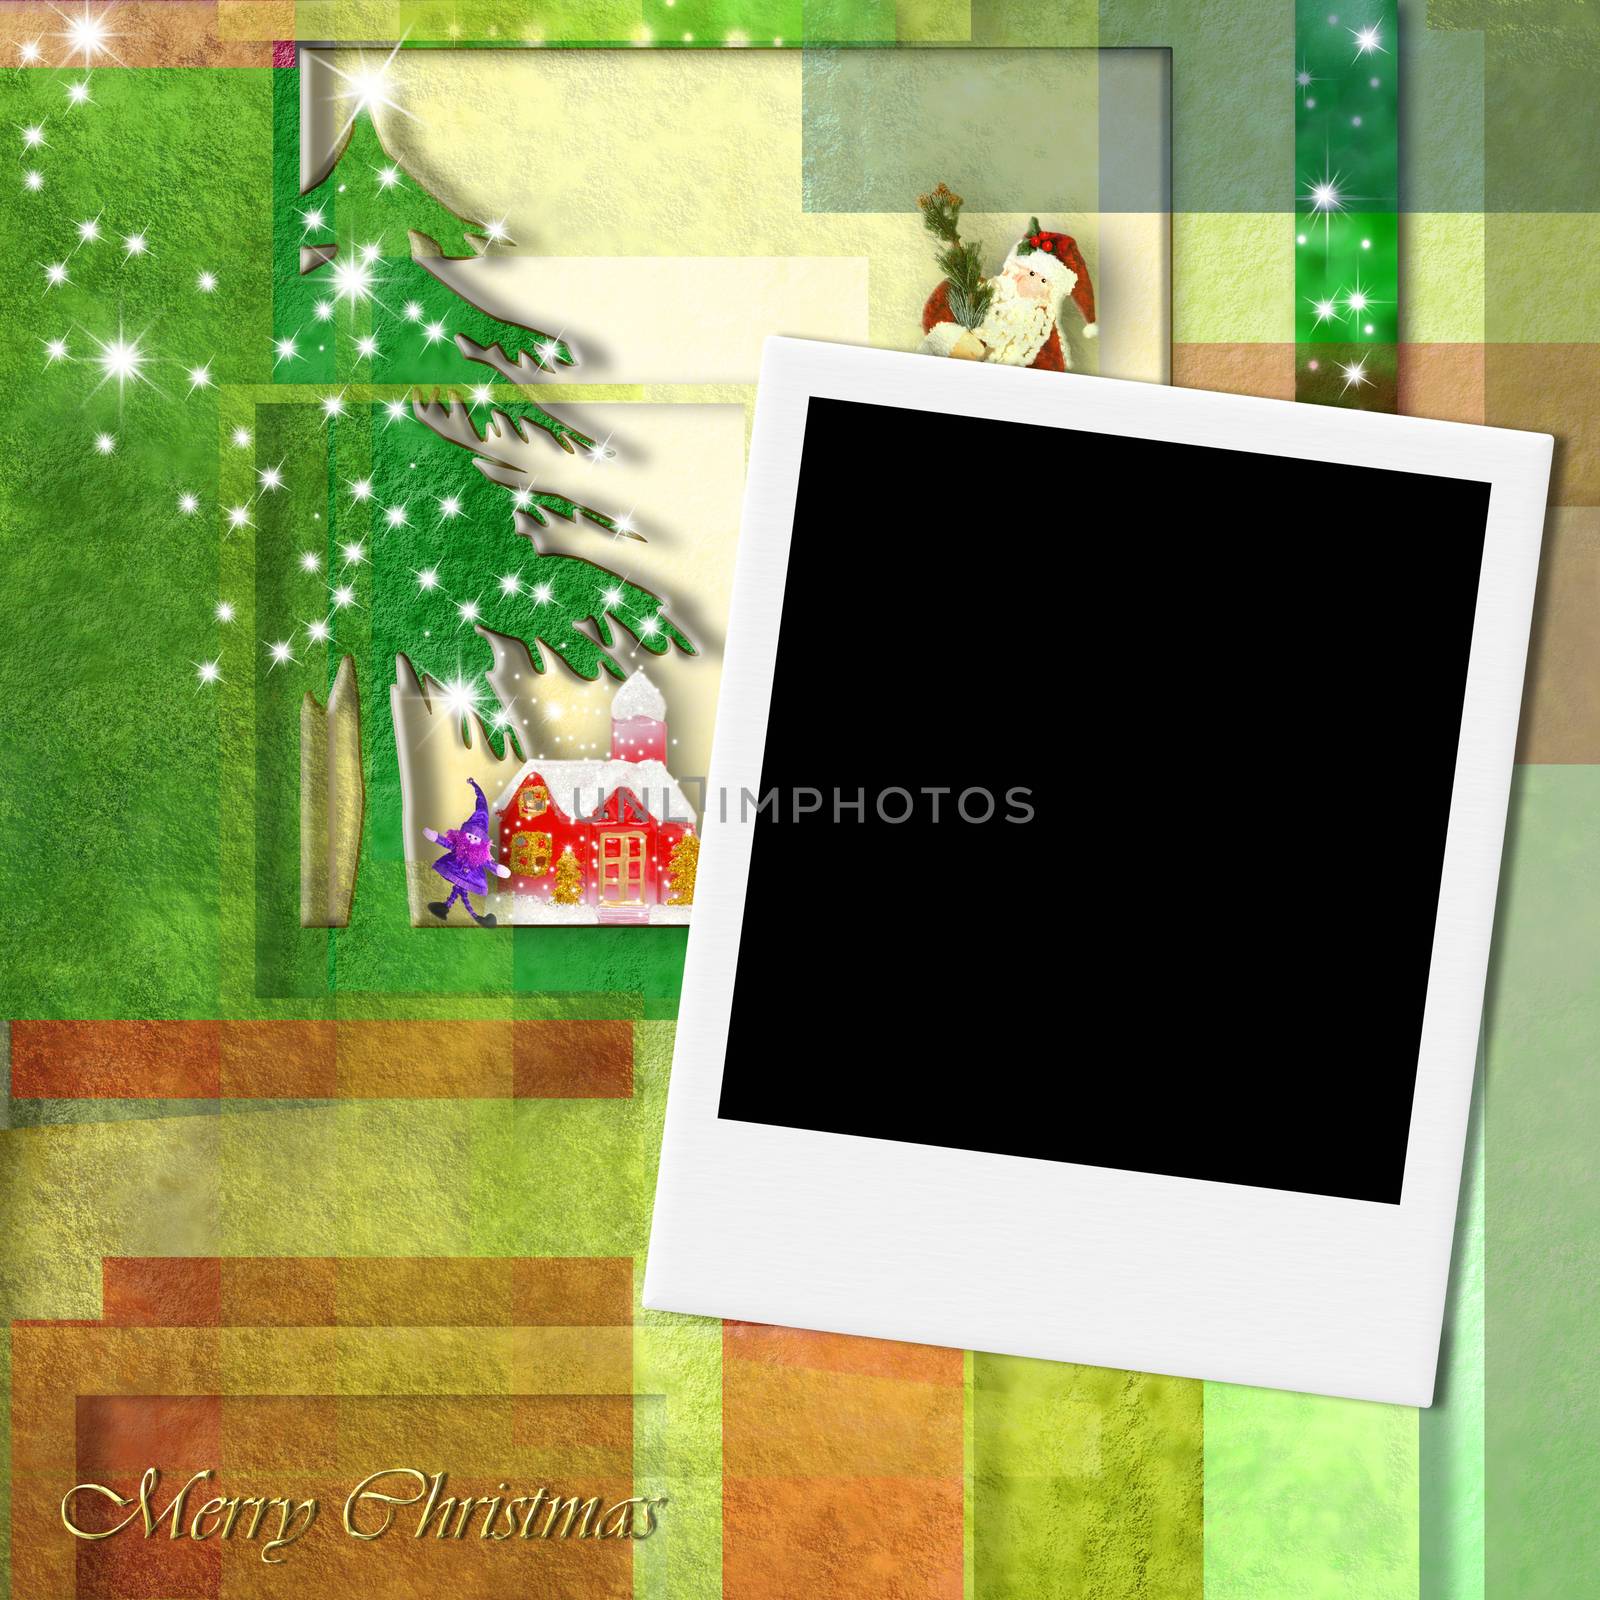 Merry Christmas Santa photo frame by Carche